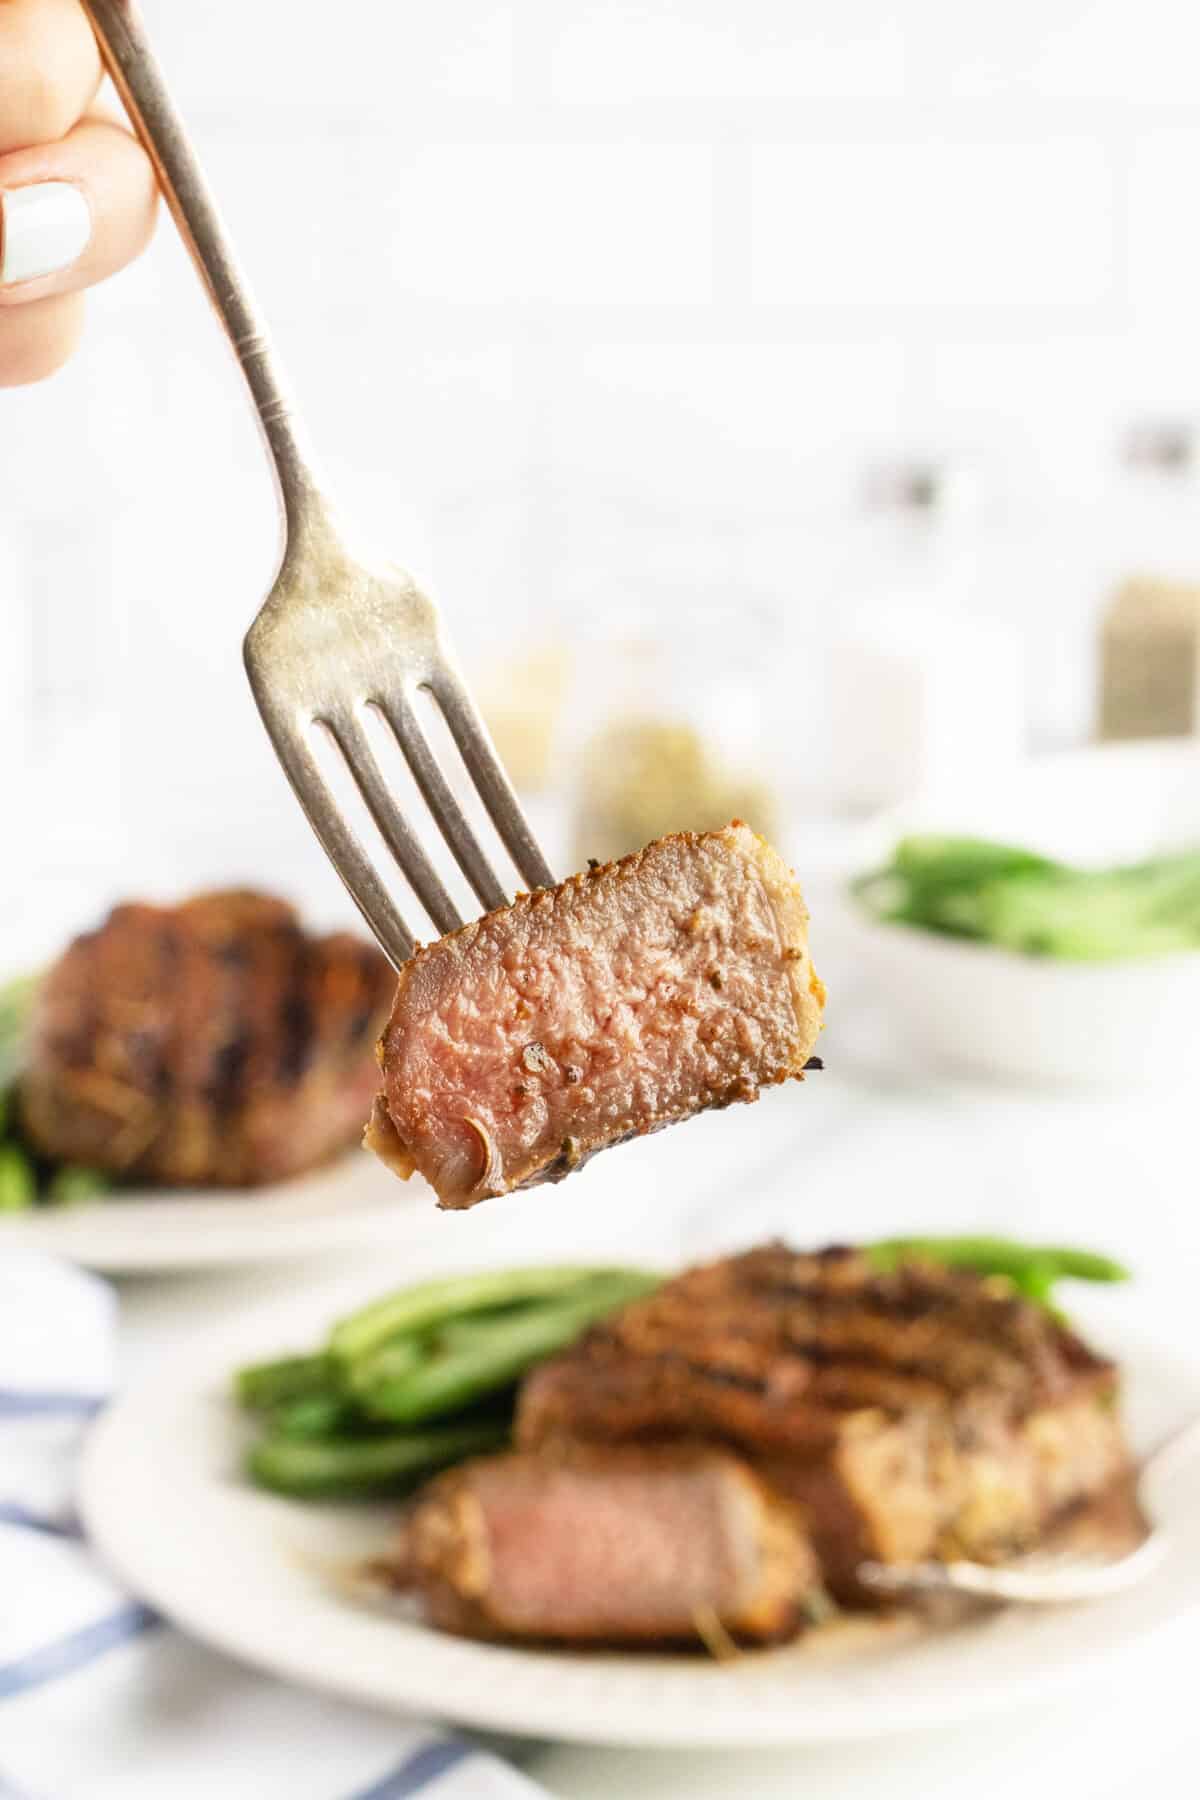 Grilled lamb chops slice on a fork